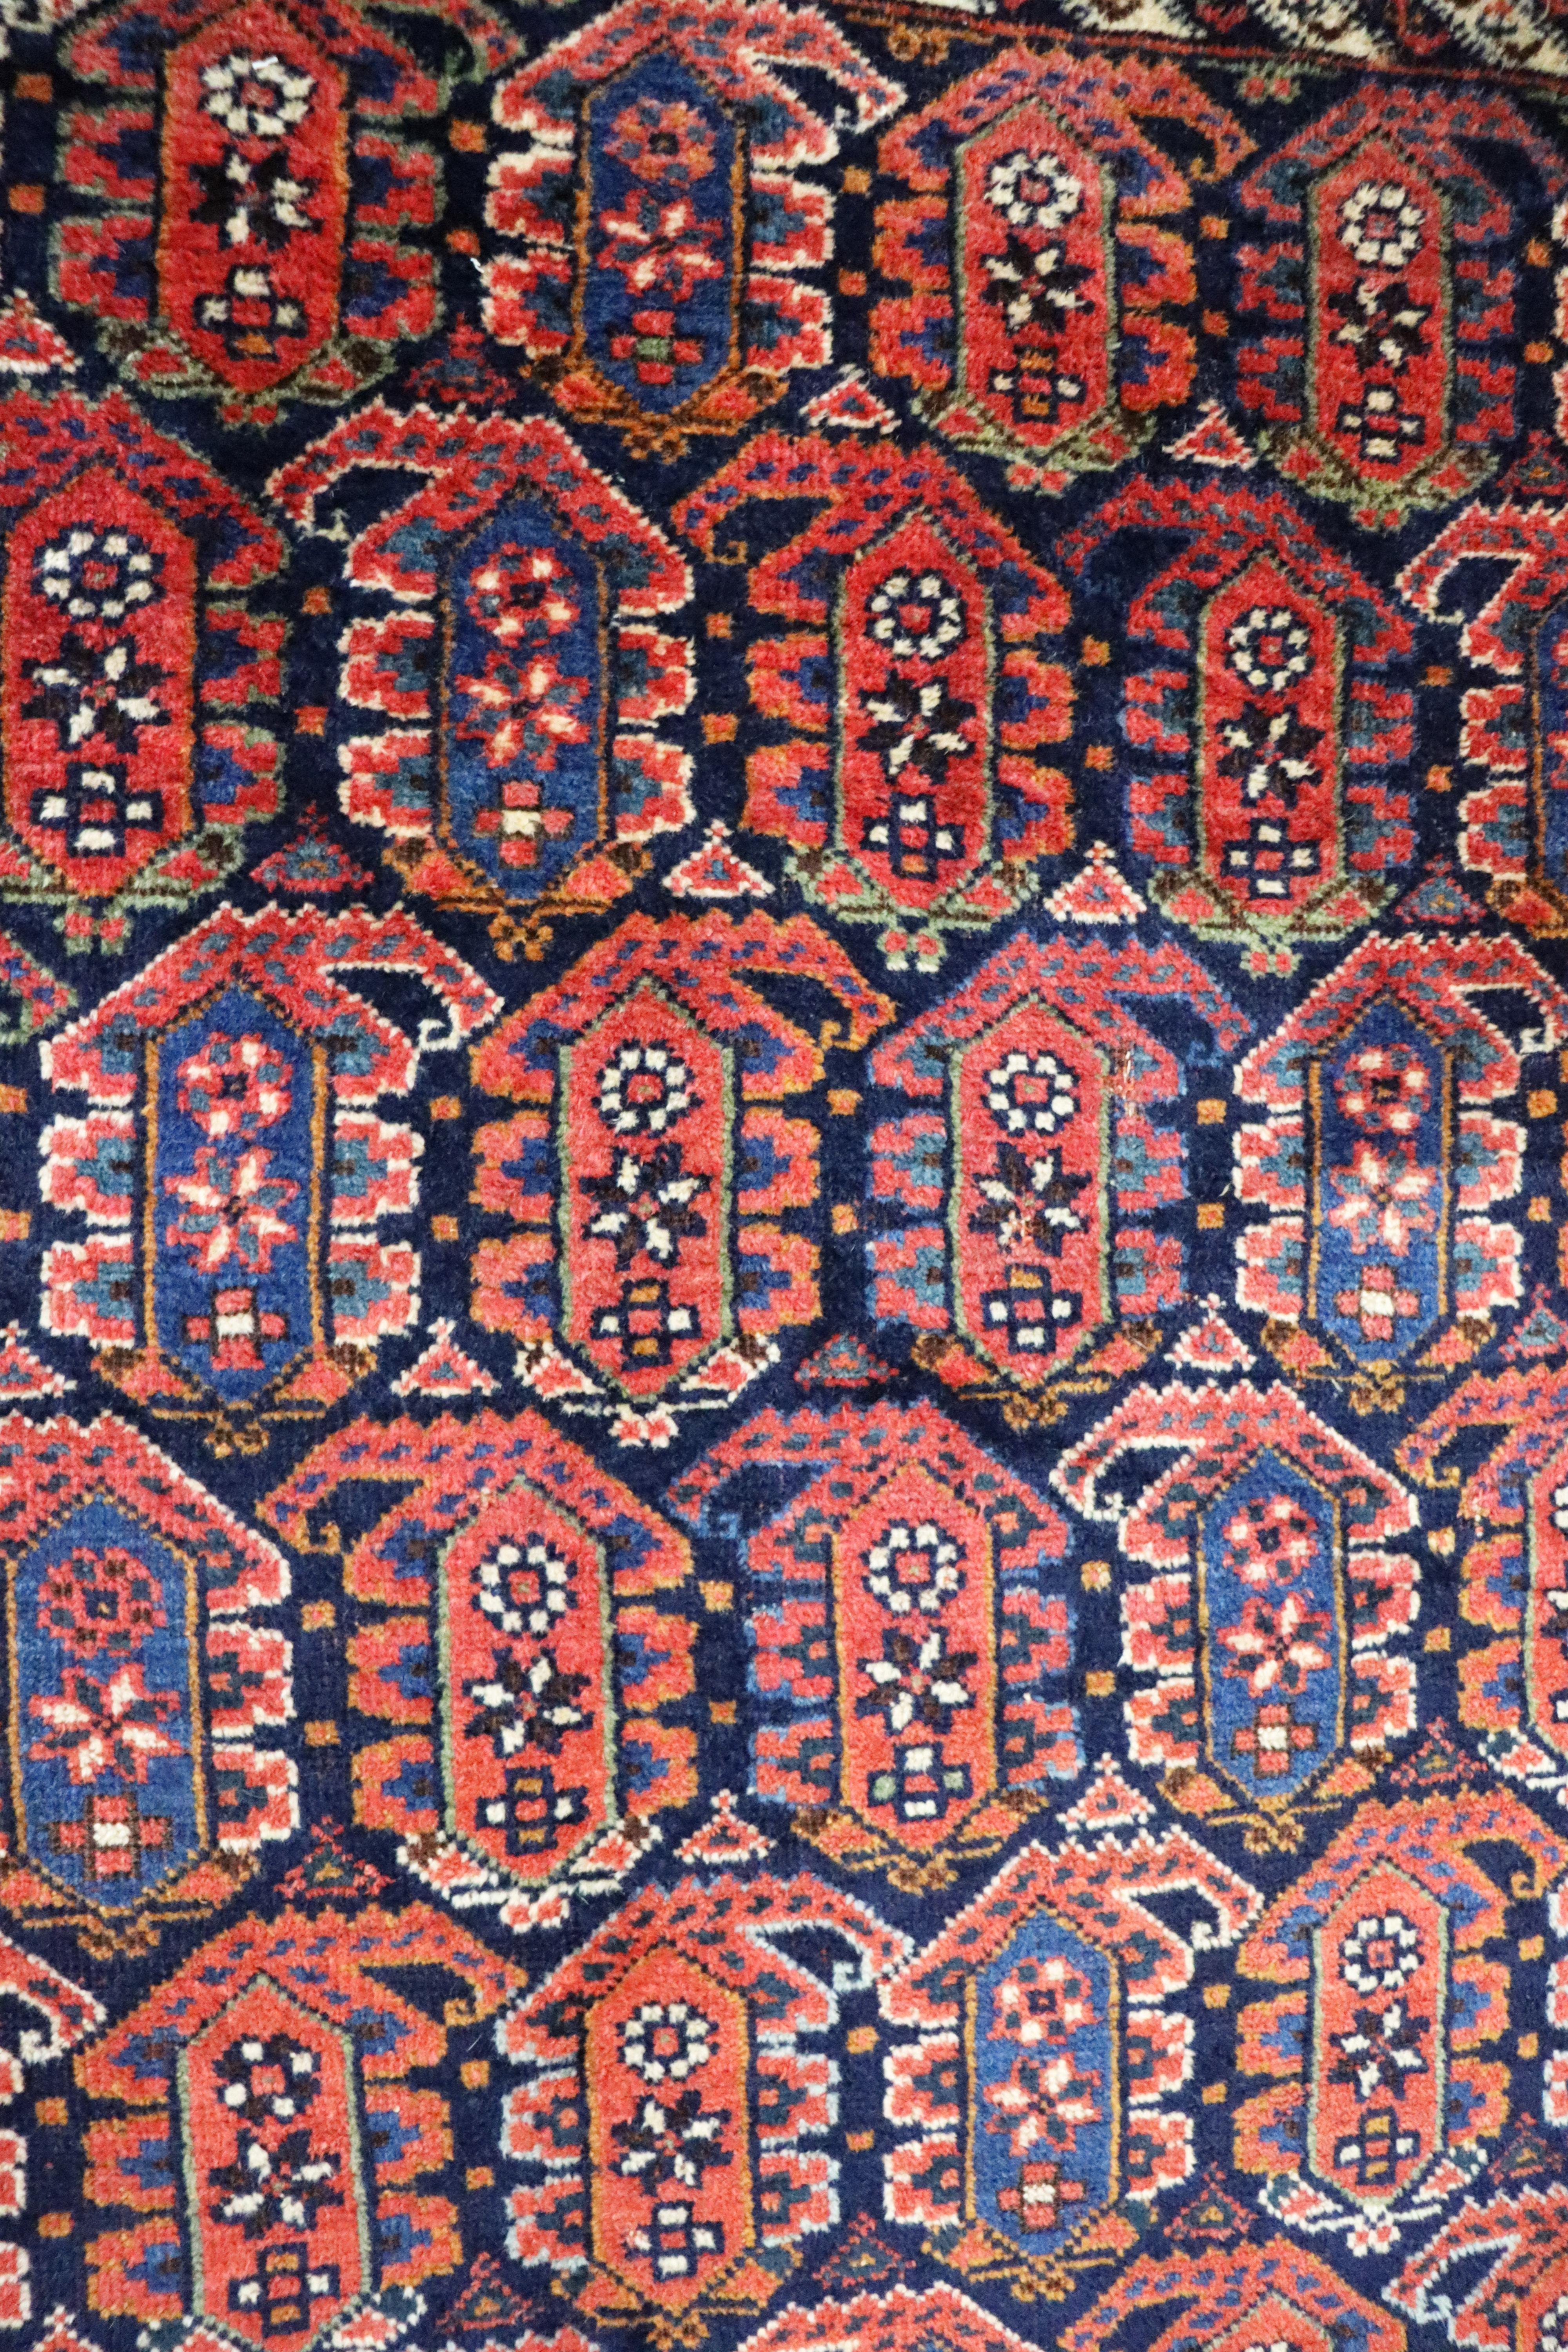 Antique Handmade Persian Afshar Carpet, Magnificent, Tribal, 5'8